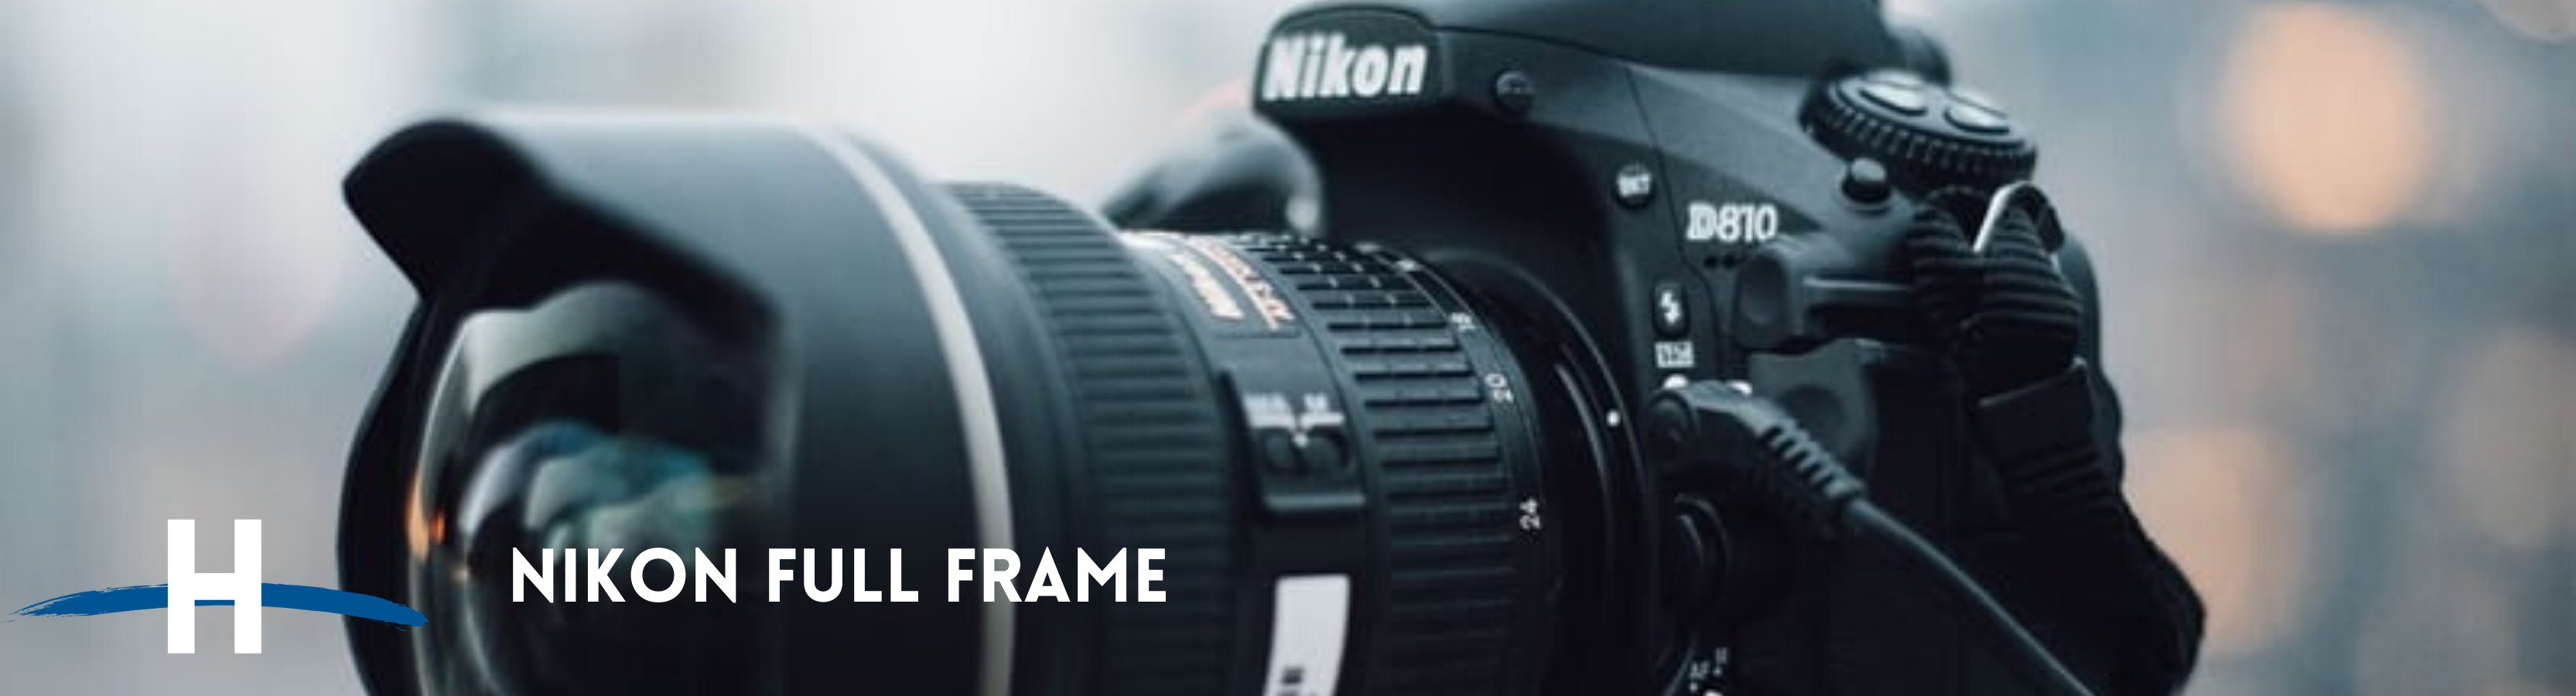 Cámaras Nikon Full Frame